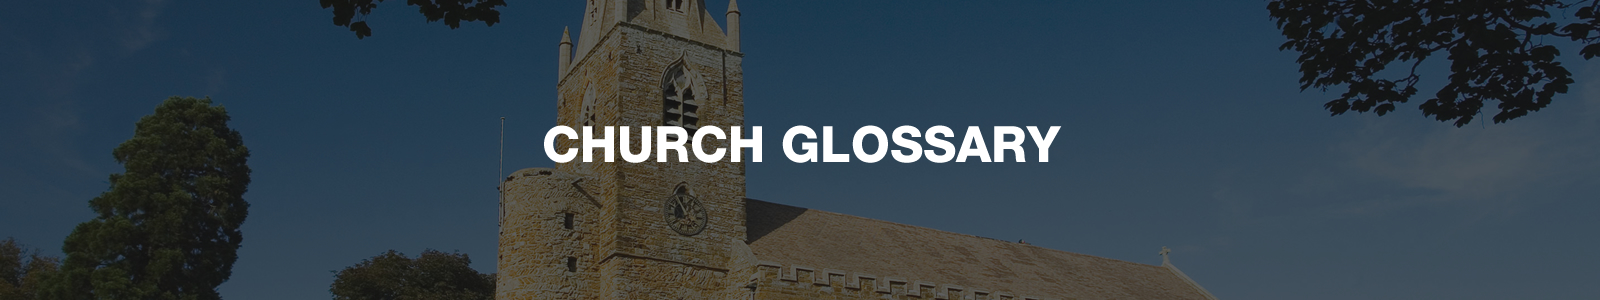 church glossary